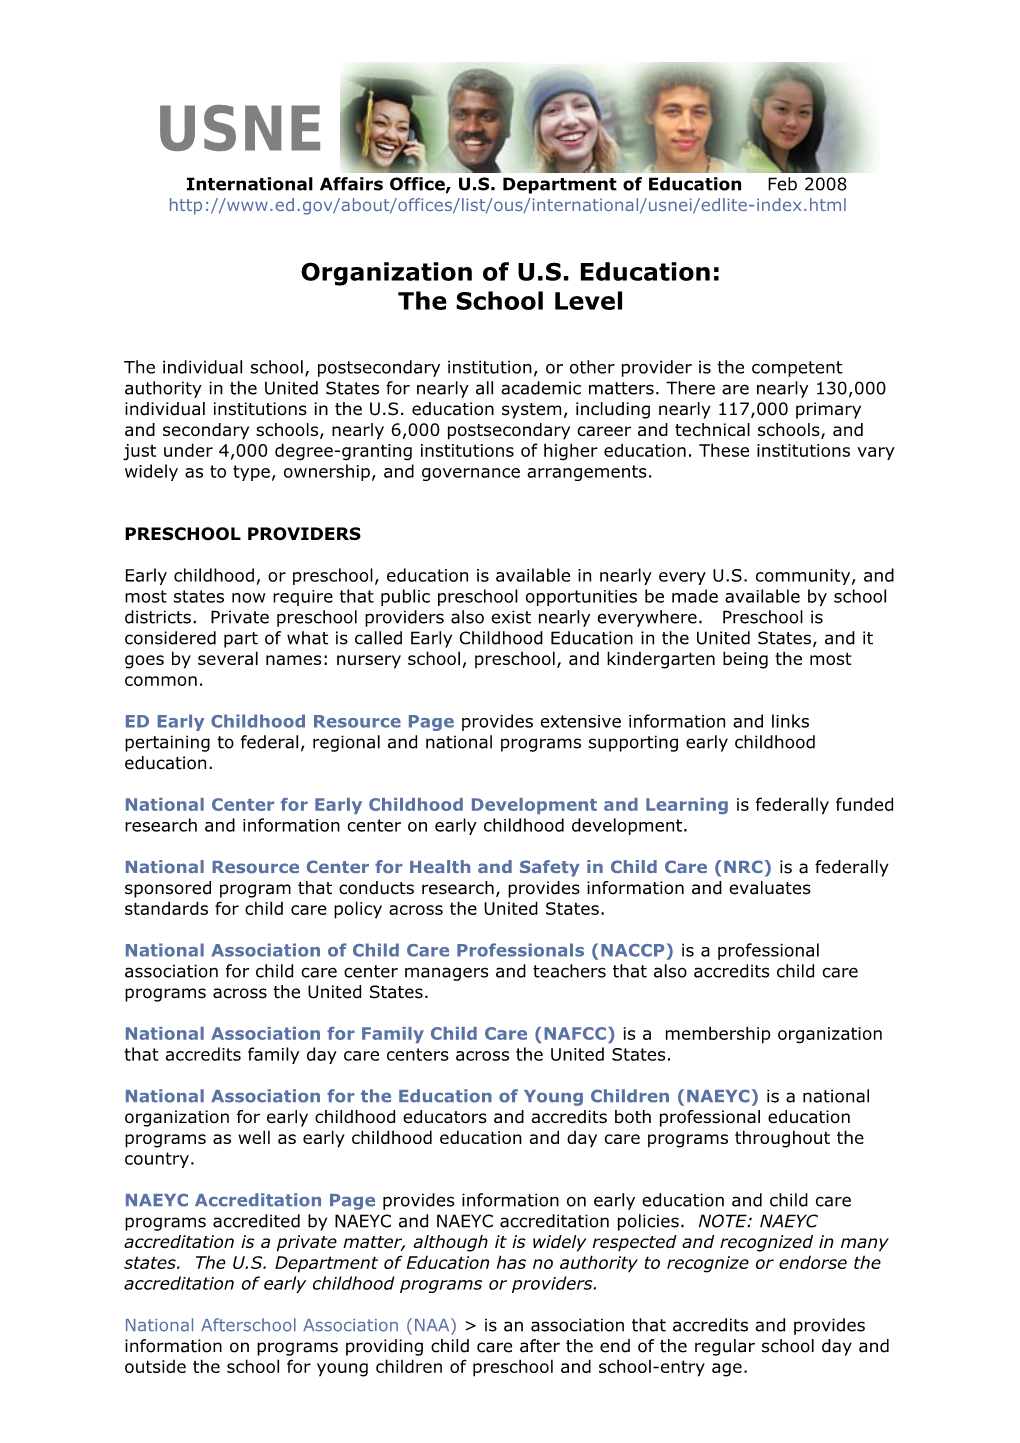 Organization of US Education: the School Level (MS Word)